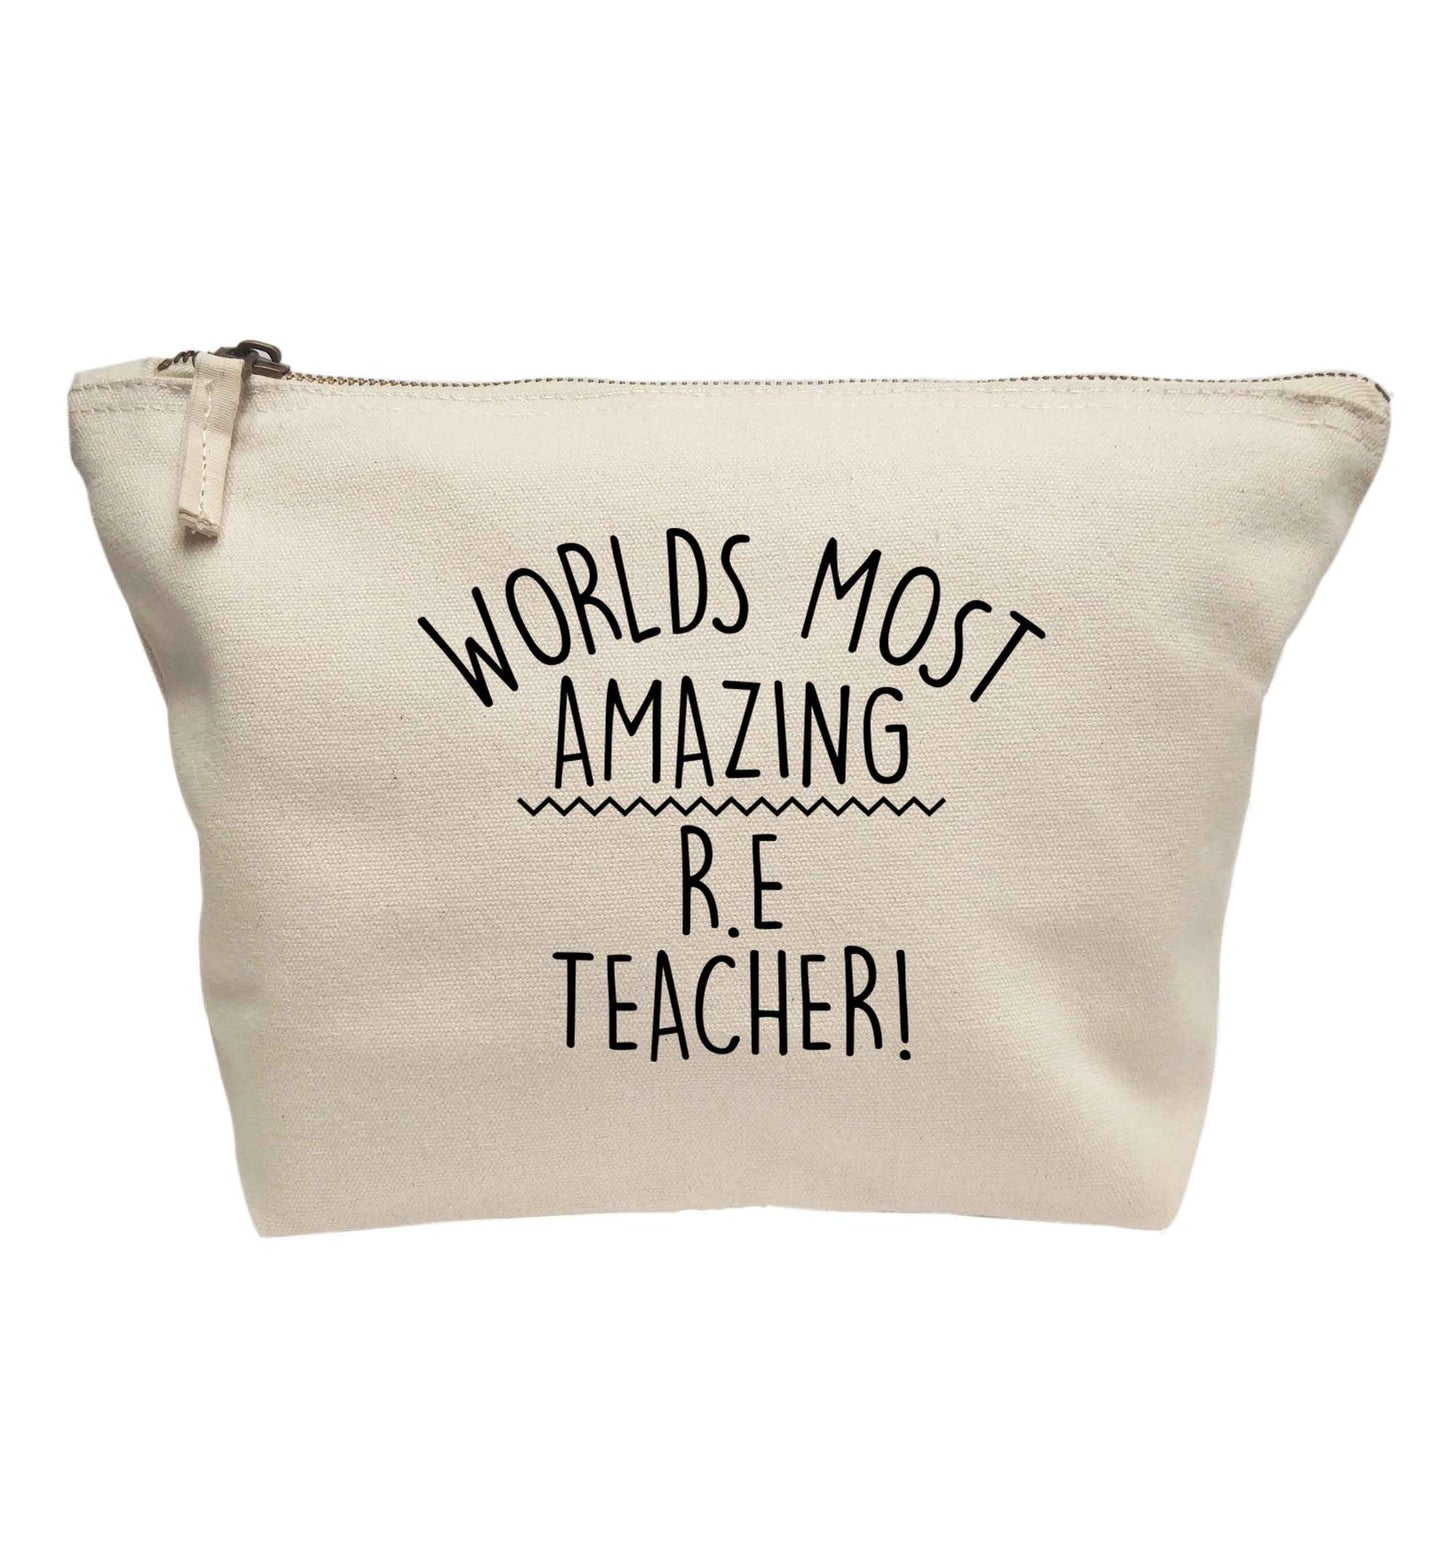 Worlds most amazing R.E teacher | Makeup / wash bag